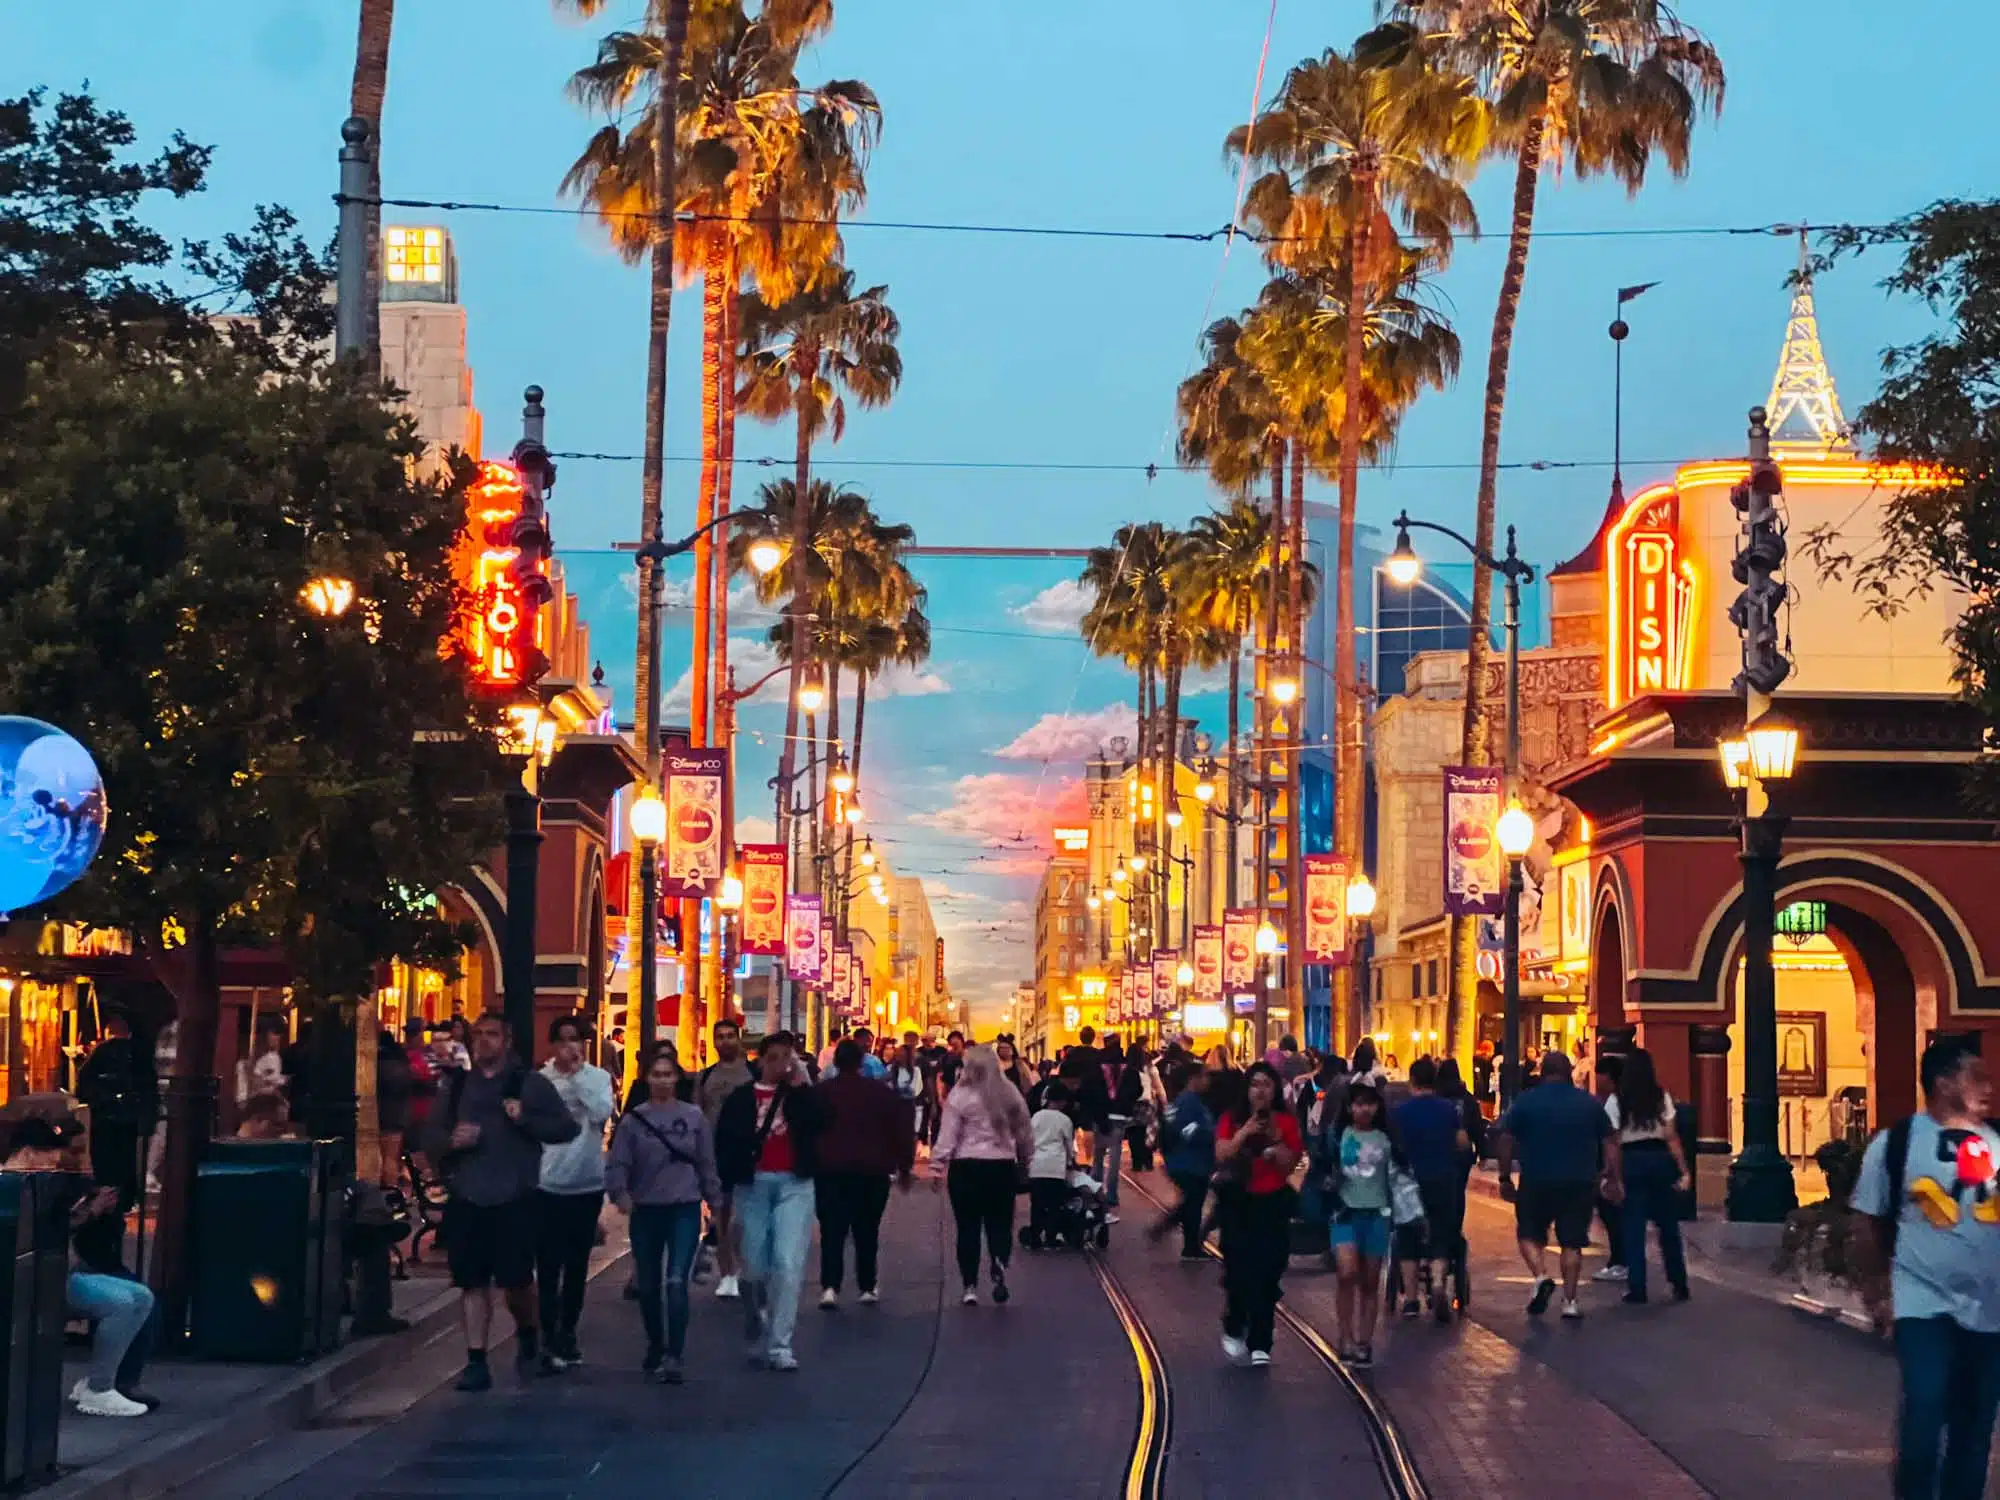 Buena Vista Street in Disney California Adventure.